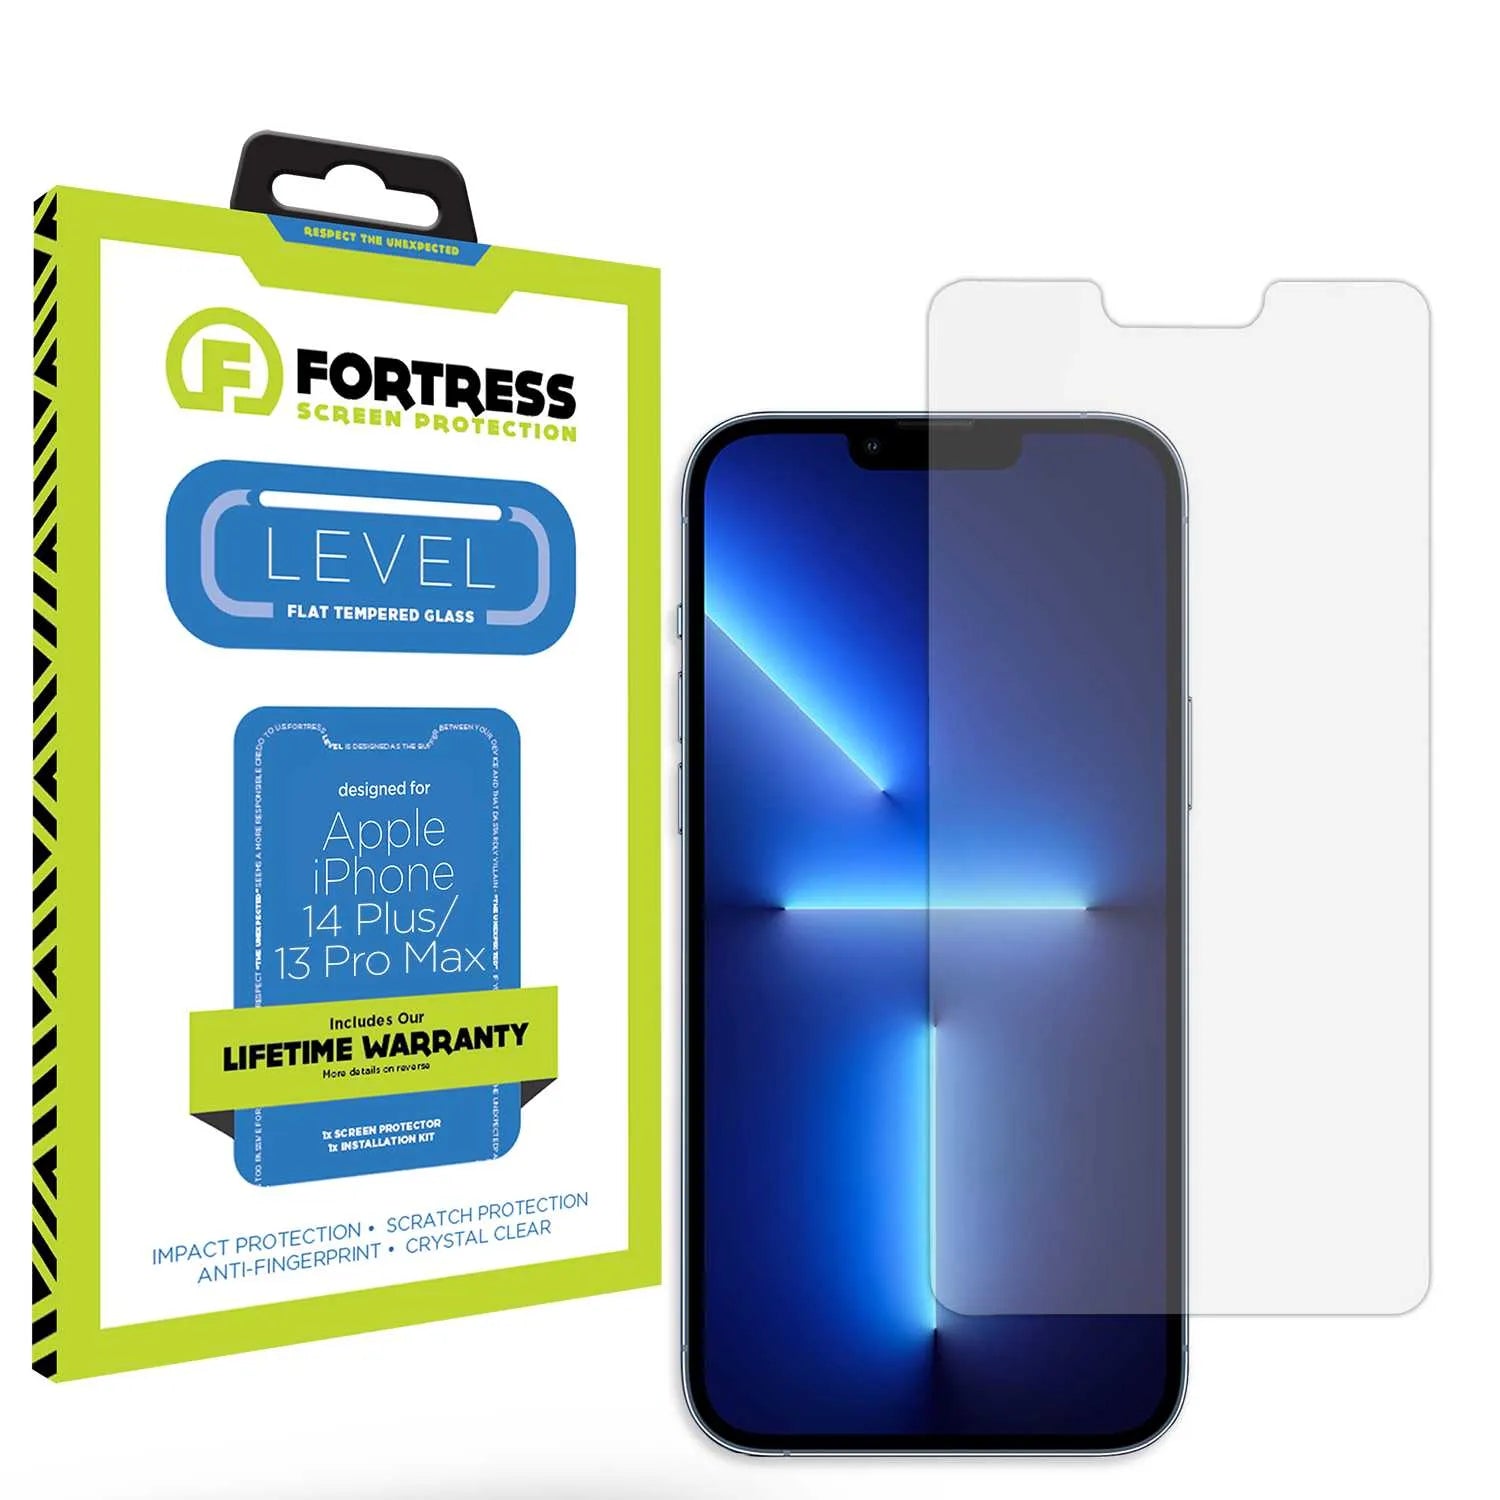 Fortress Fortress Warranty Replacement Program AppleiPhone13ProMaxScreenProtector Warranty 8.99